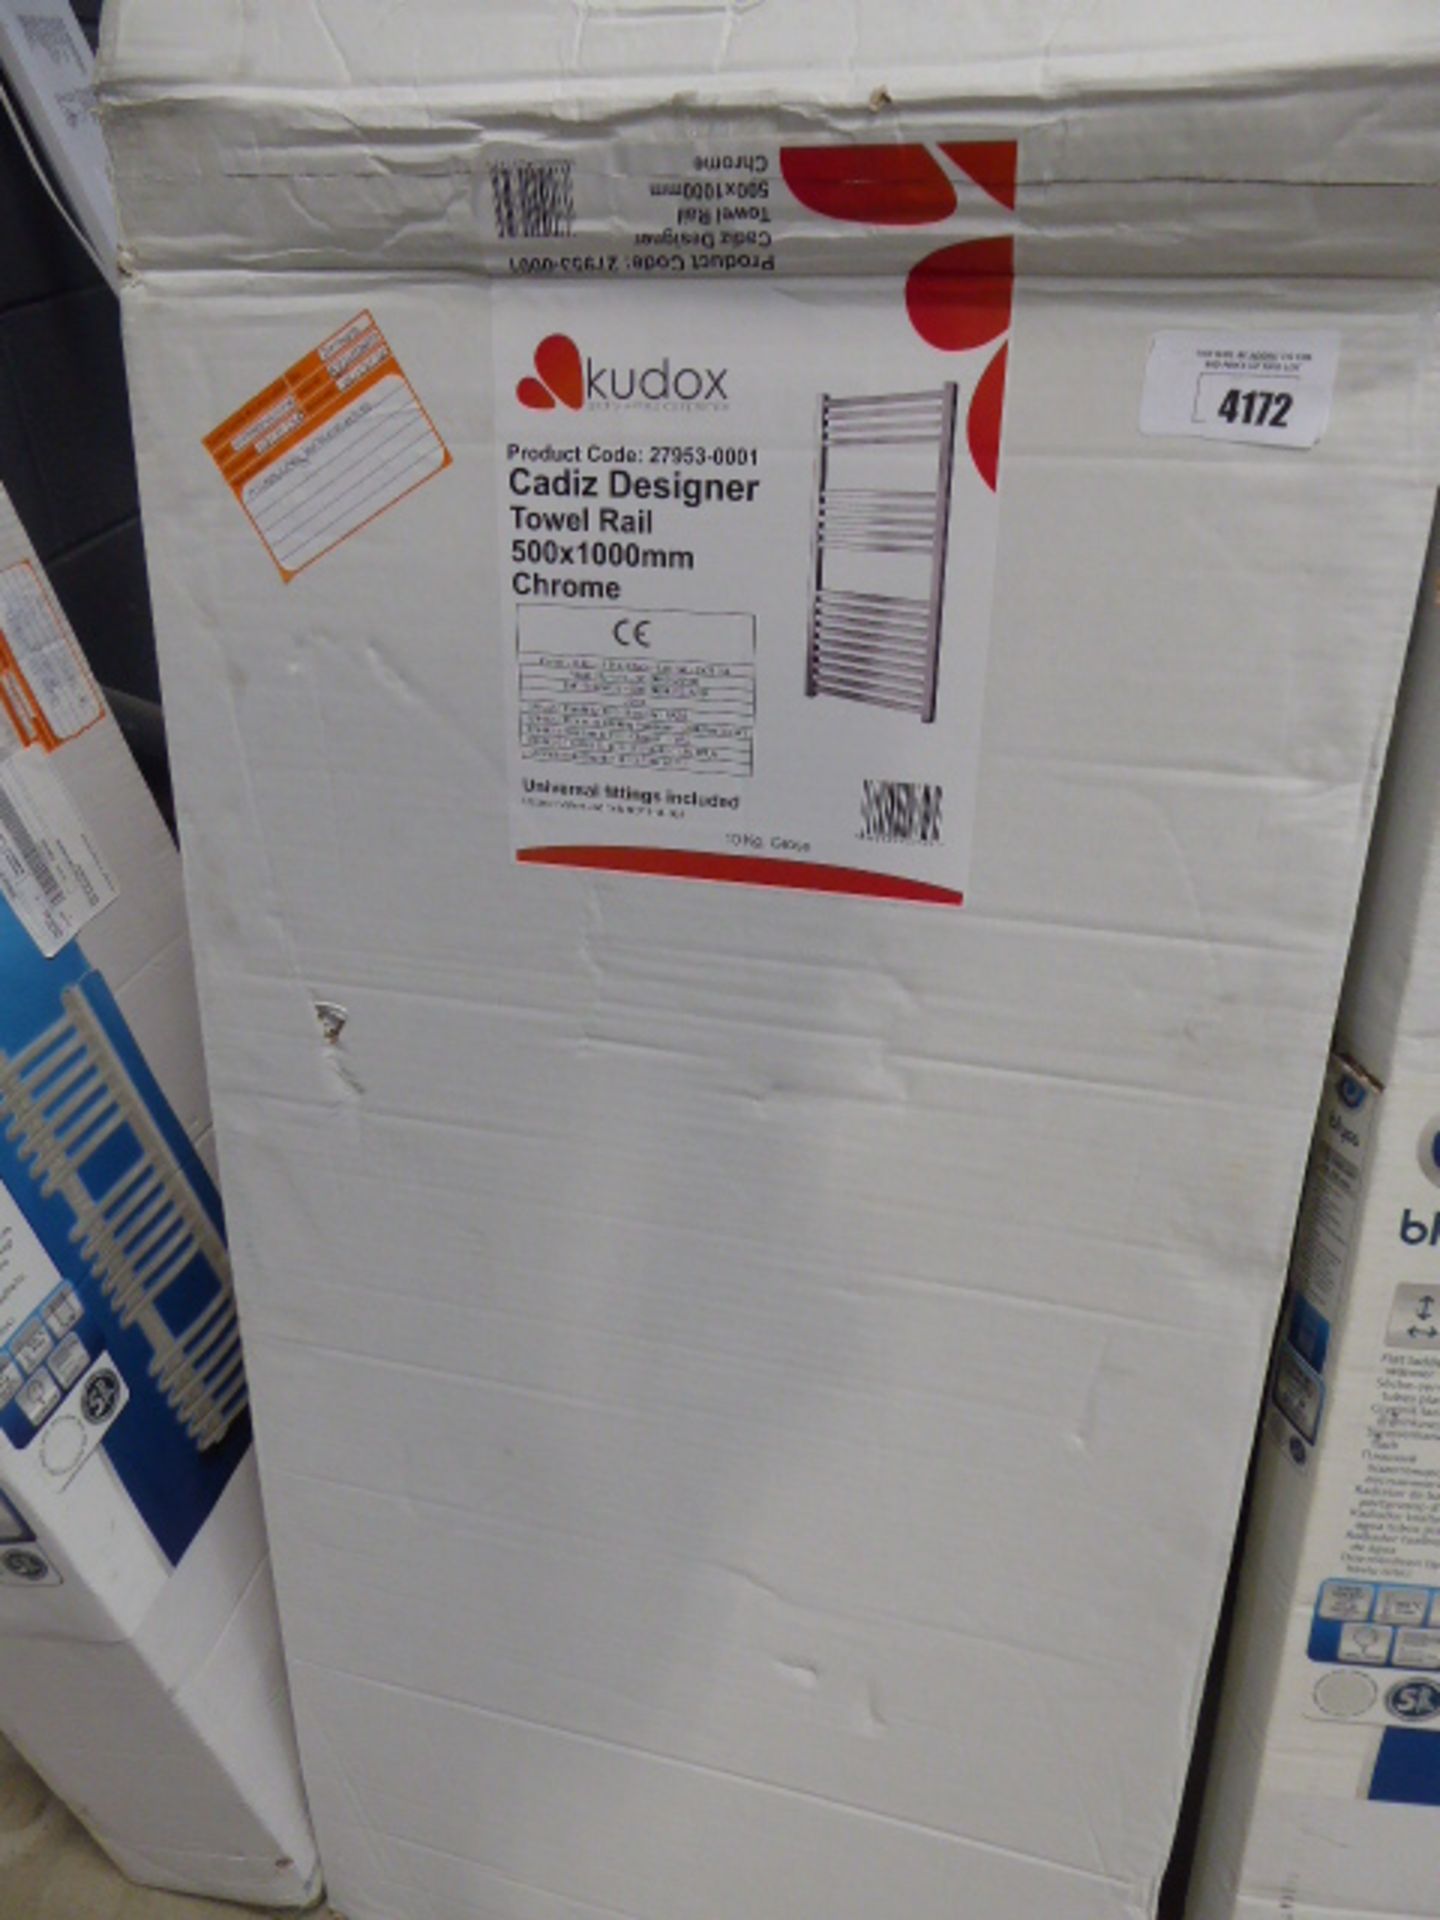 A Kudox Cadiz designer towel radiator, 500 x 1100mm in chrome